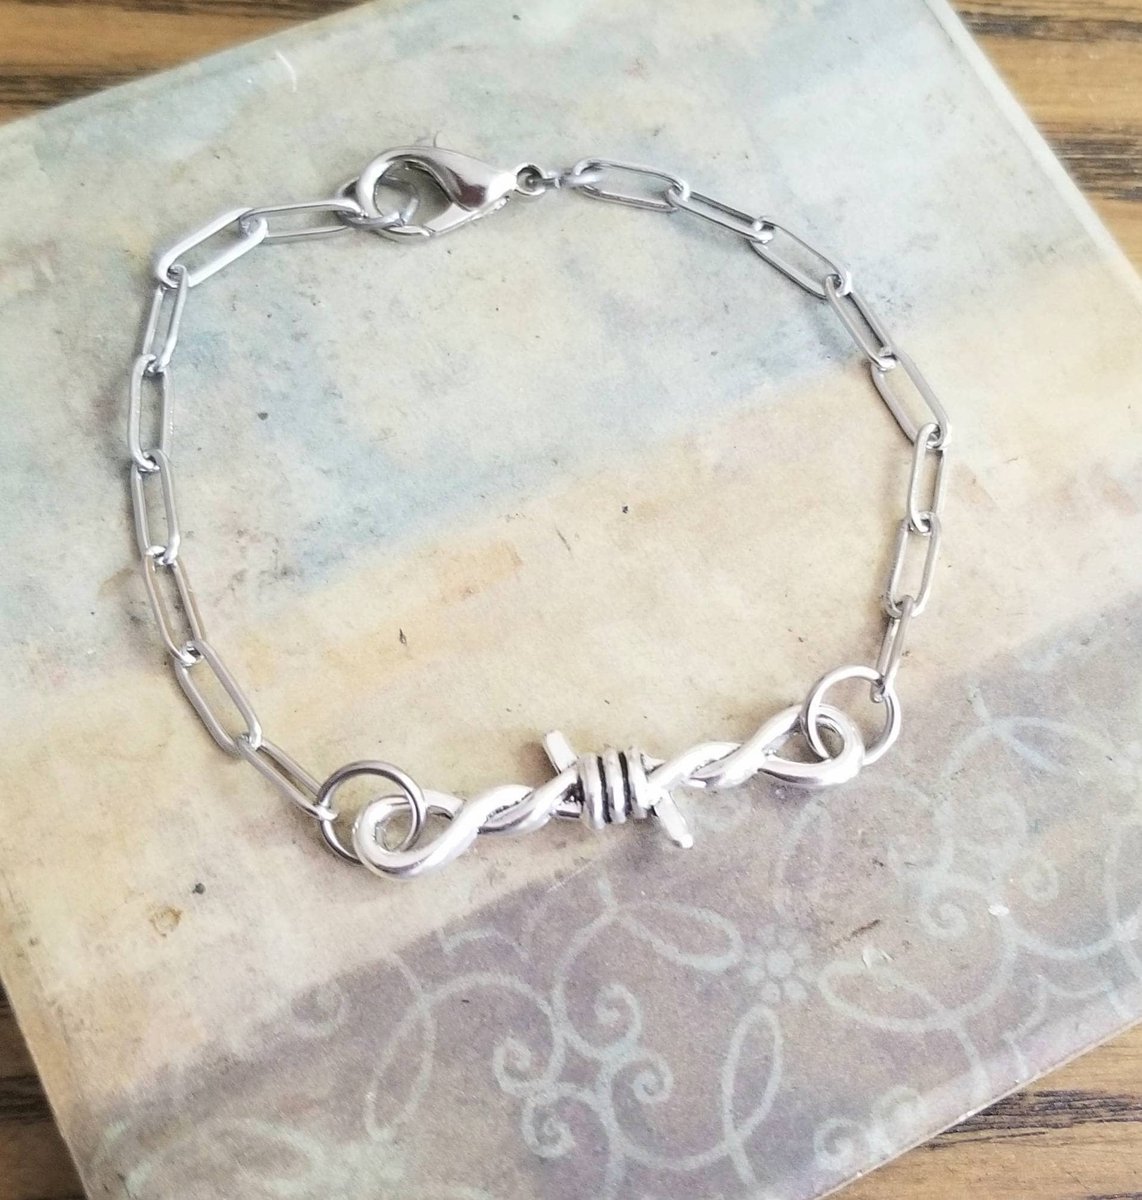 Barbed Wire Bracelet, Stainless Steel 3mm Paperclip Chain Bracelet #jewelry #bracelet #bracelets #chainbracelet #barbedwire #paperclipchain #trendyjewelry #backtoschool #unisex #Streetwear #contemporaryjewelry #handmadejewelry 

etsy.me/3JUvuEH via @Etsy